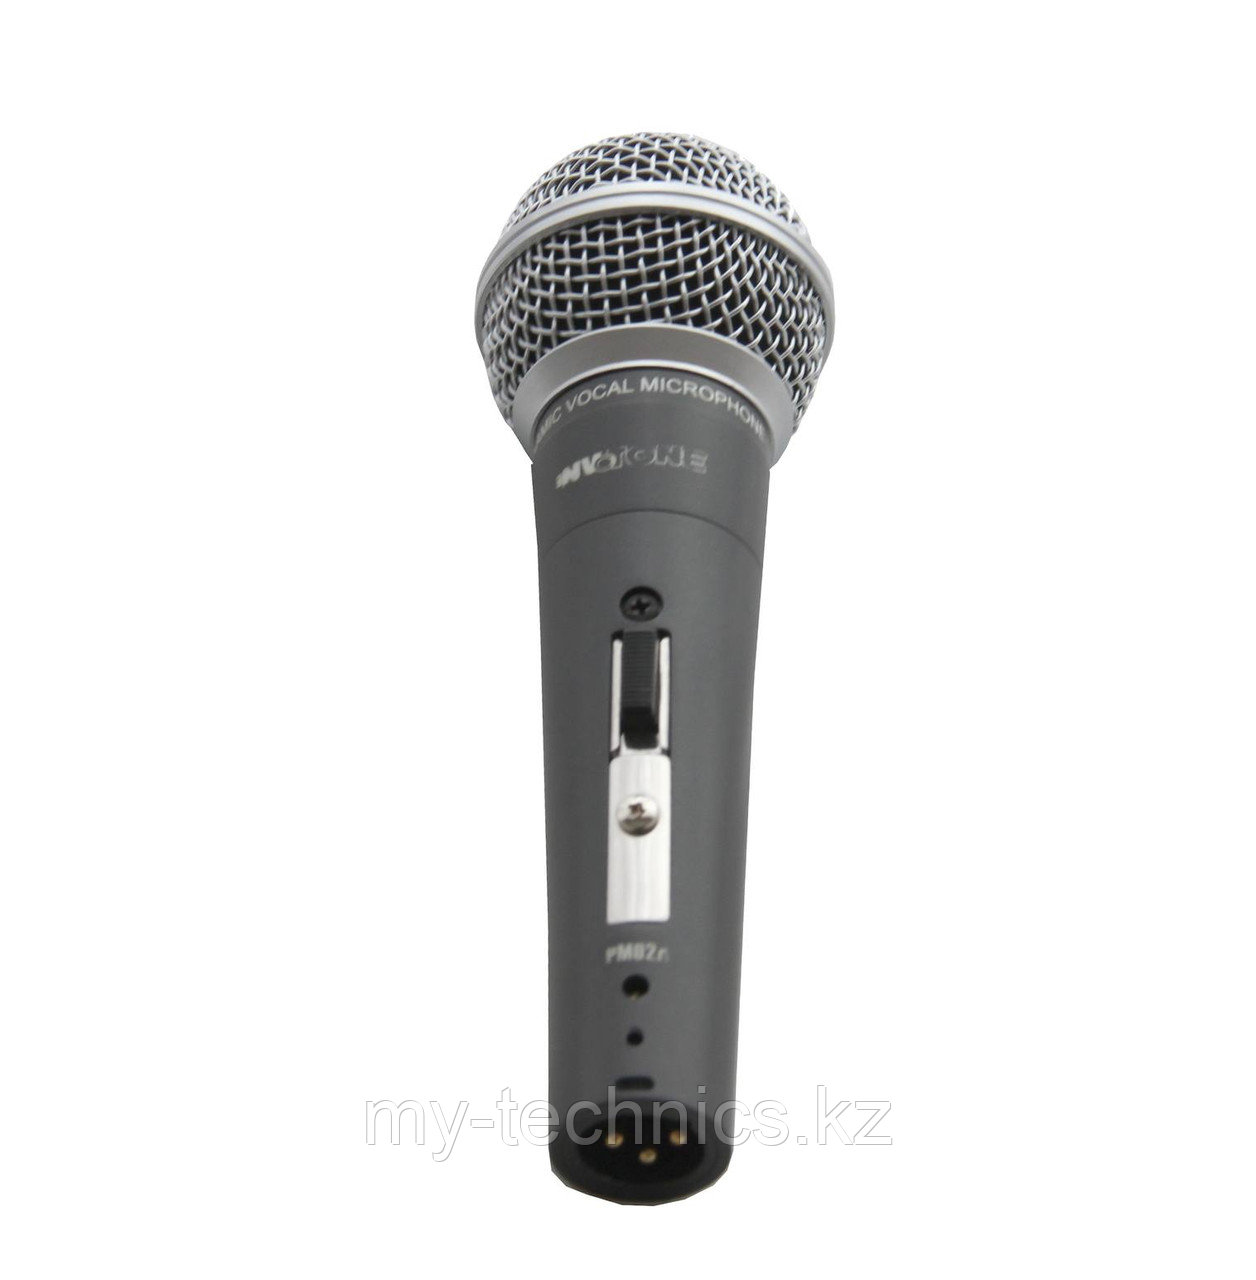 Микрофон NewStar 88-OK-200